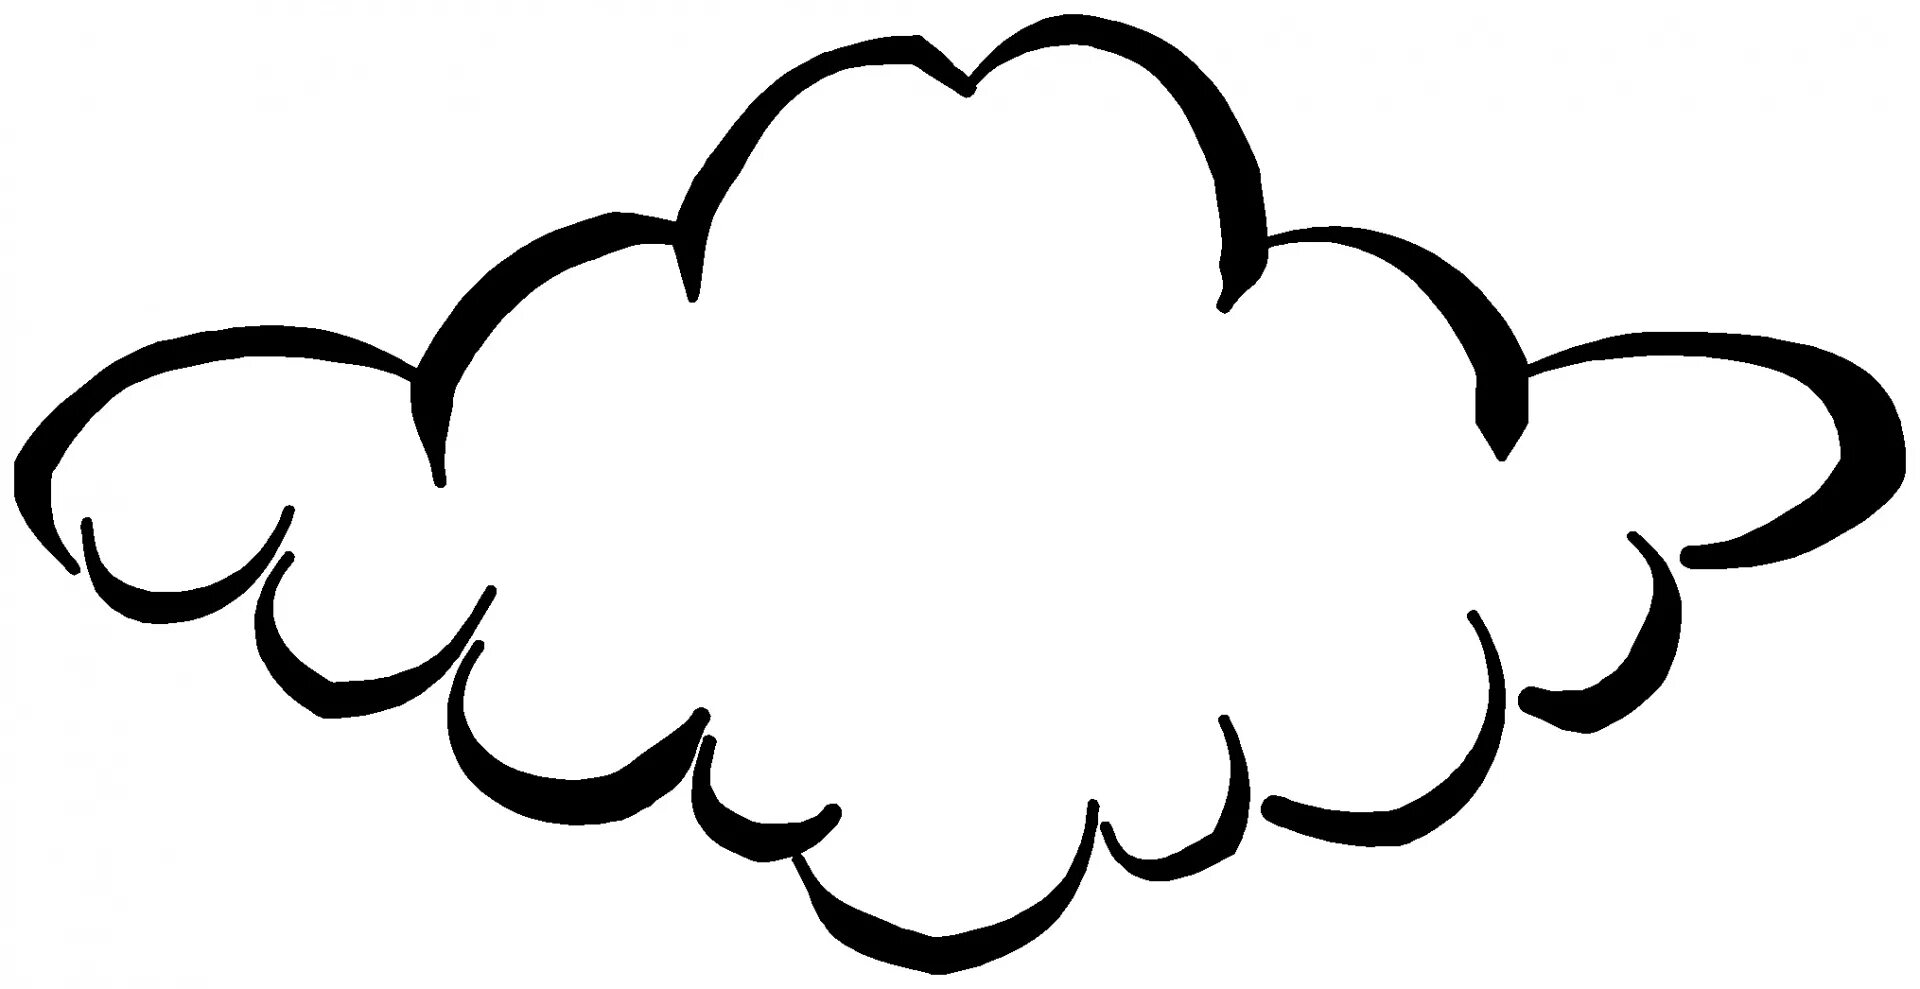 Облачко для рисования. Облако контур. Облако для детей. Контур облака на прозрачном фоне.